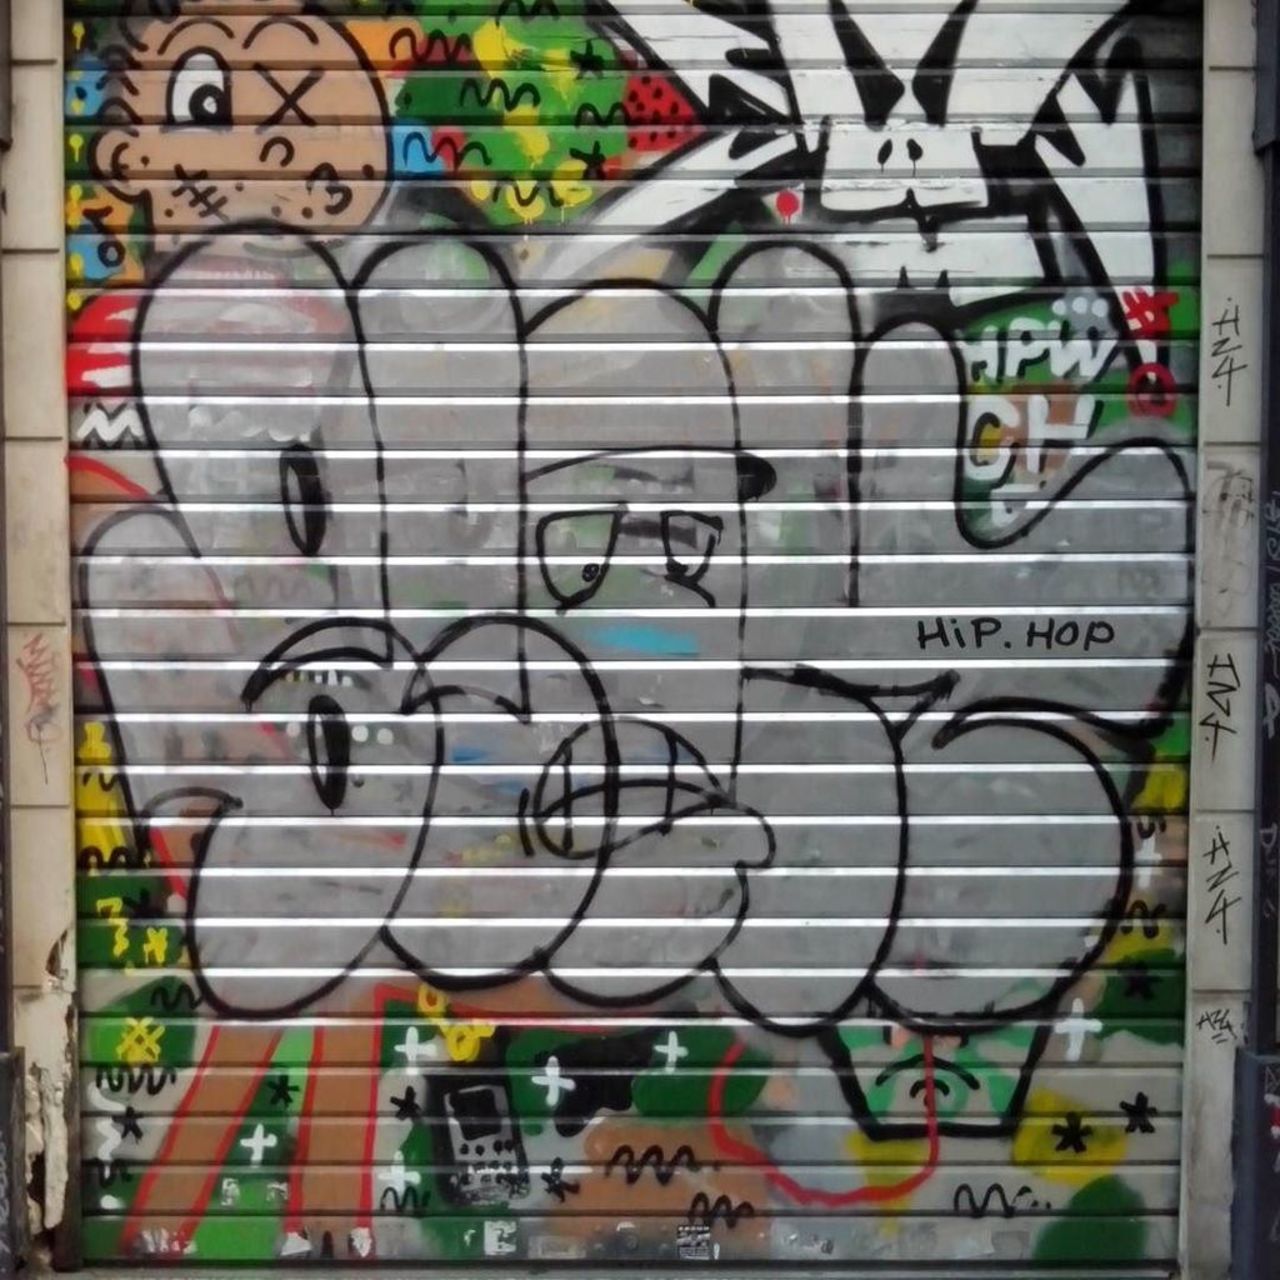 #streetart #streetarteverywhere #streetshot #graffitiart #graffiti #arturbain #urbanart  #rideaudefer #stencil #spr… https://t.co/NPTXuylJJU